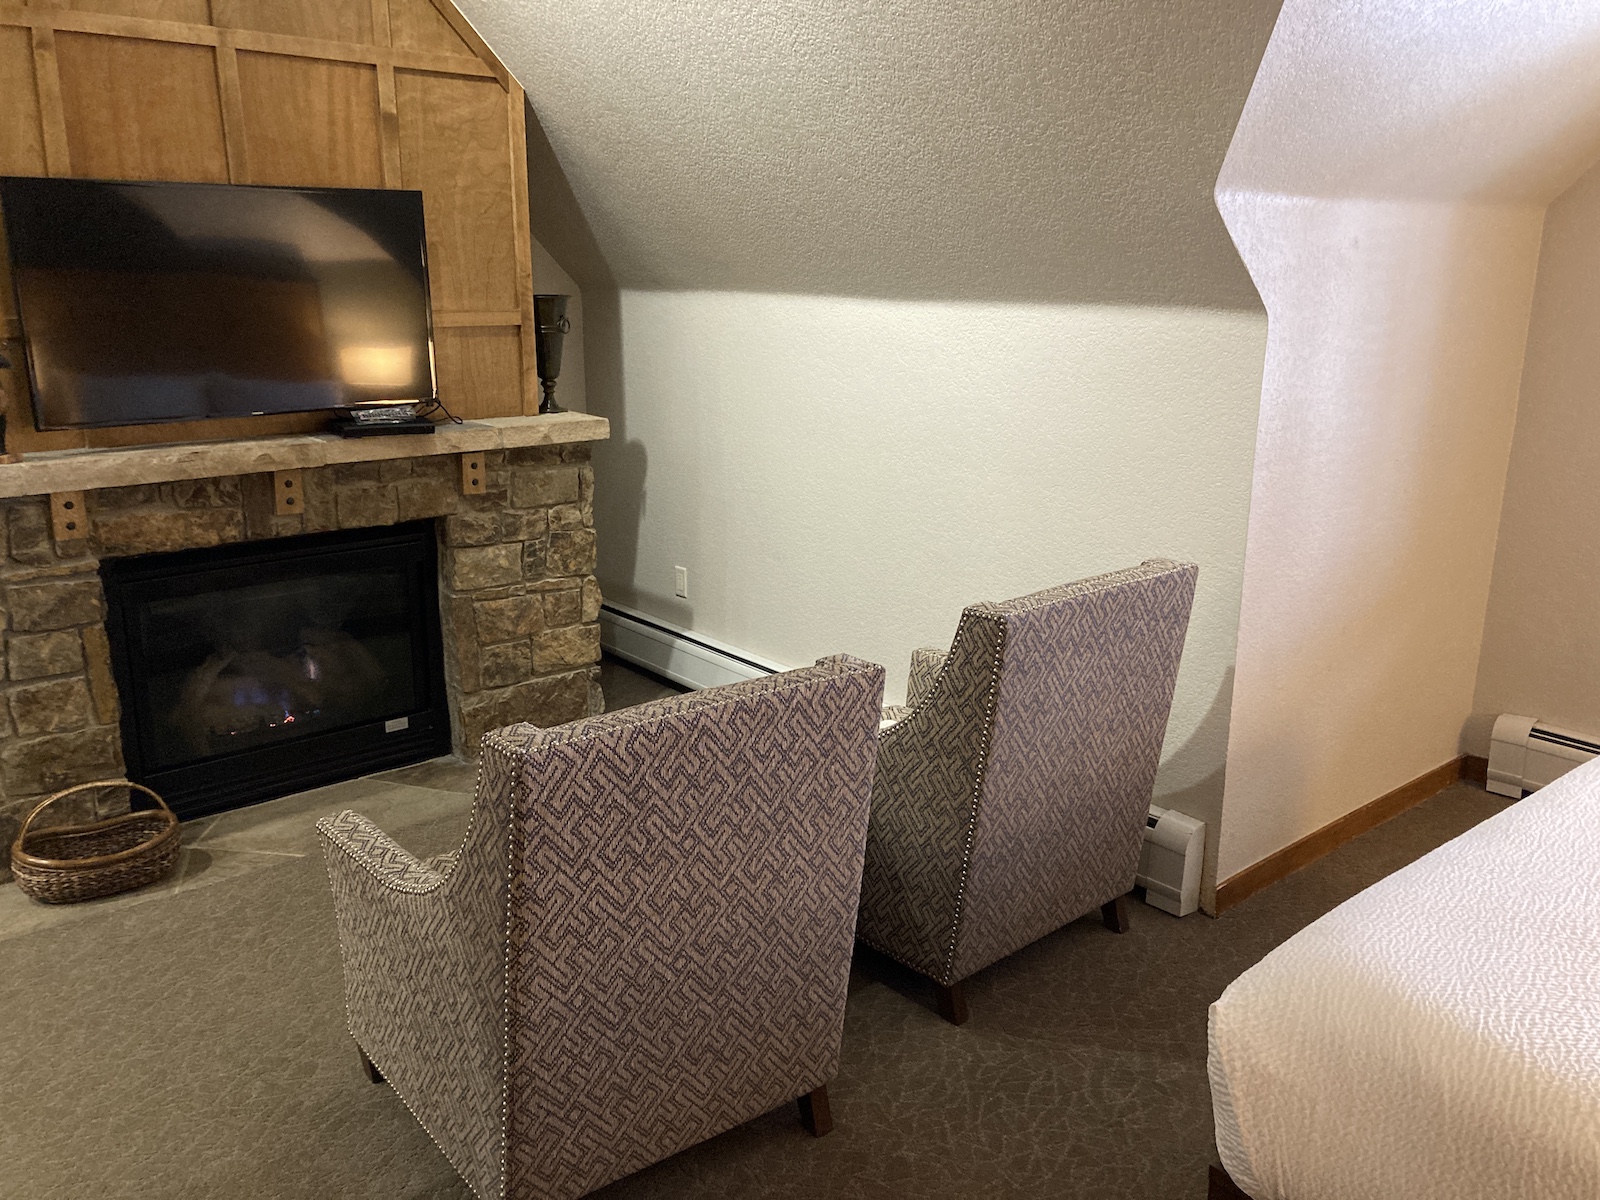 Hyatt Residence Club Breckenridge Review – Ski Resort Meets Apartments